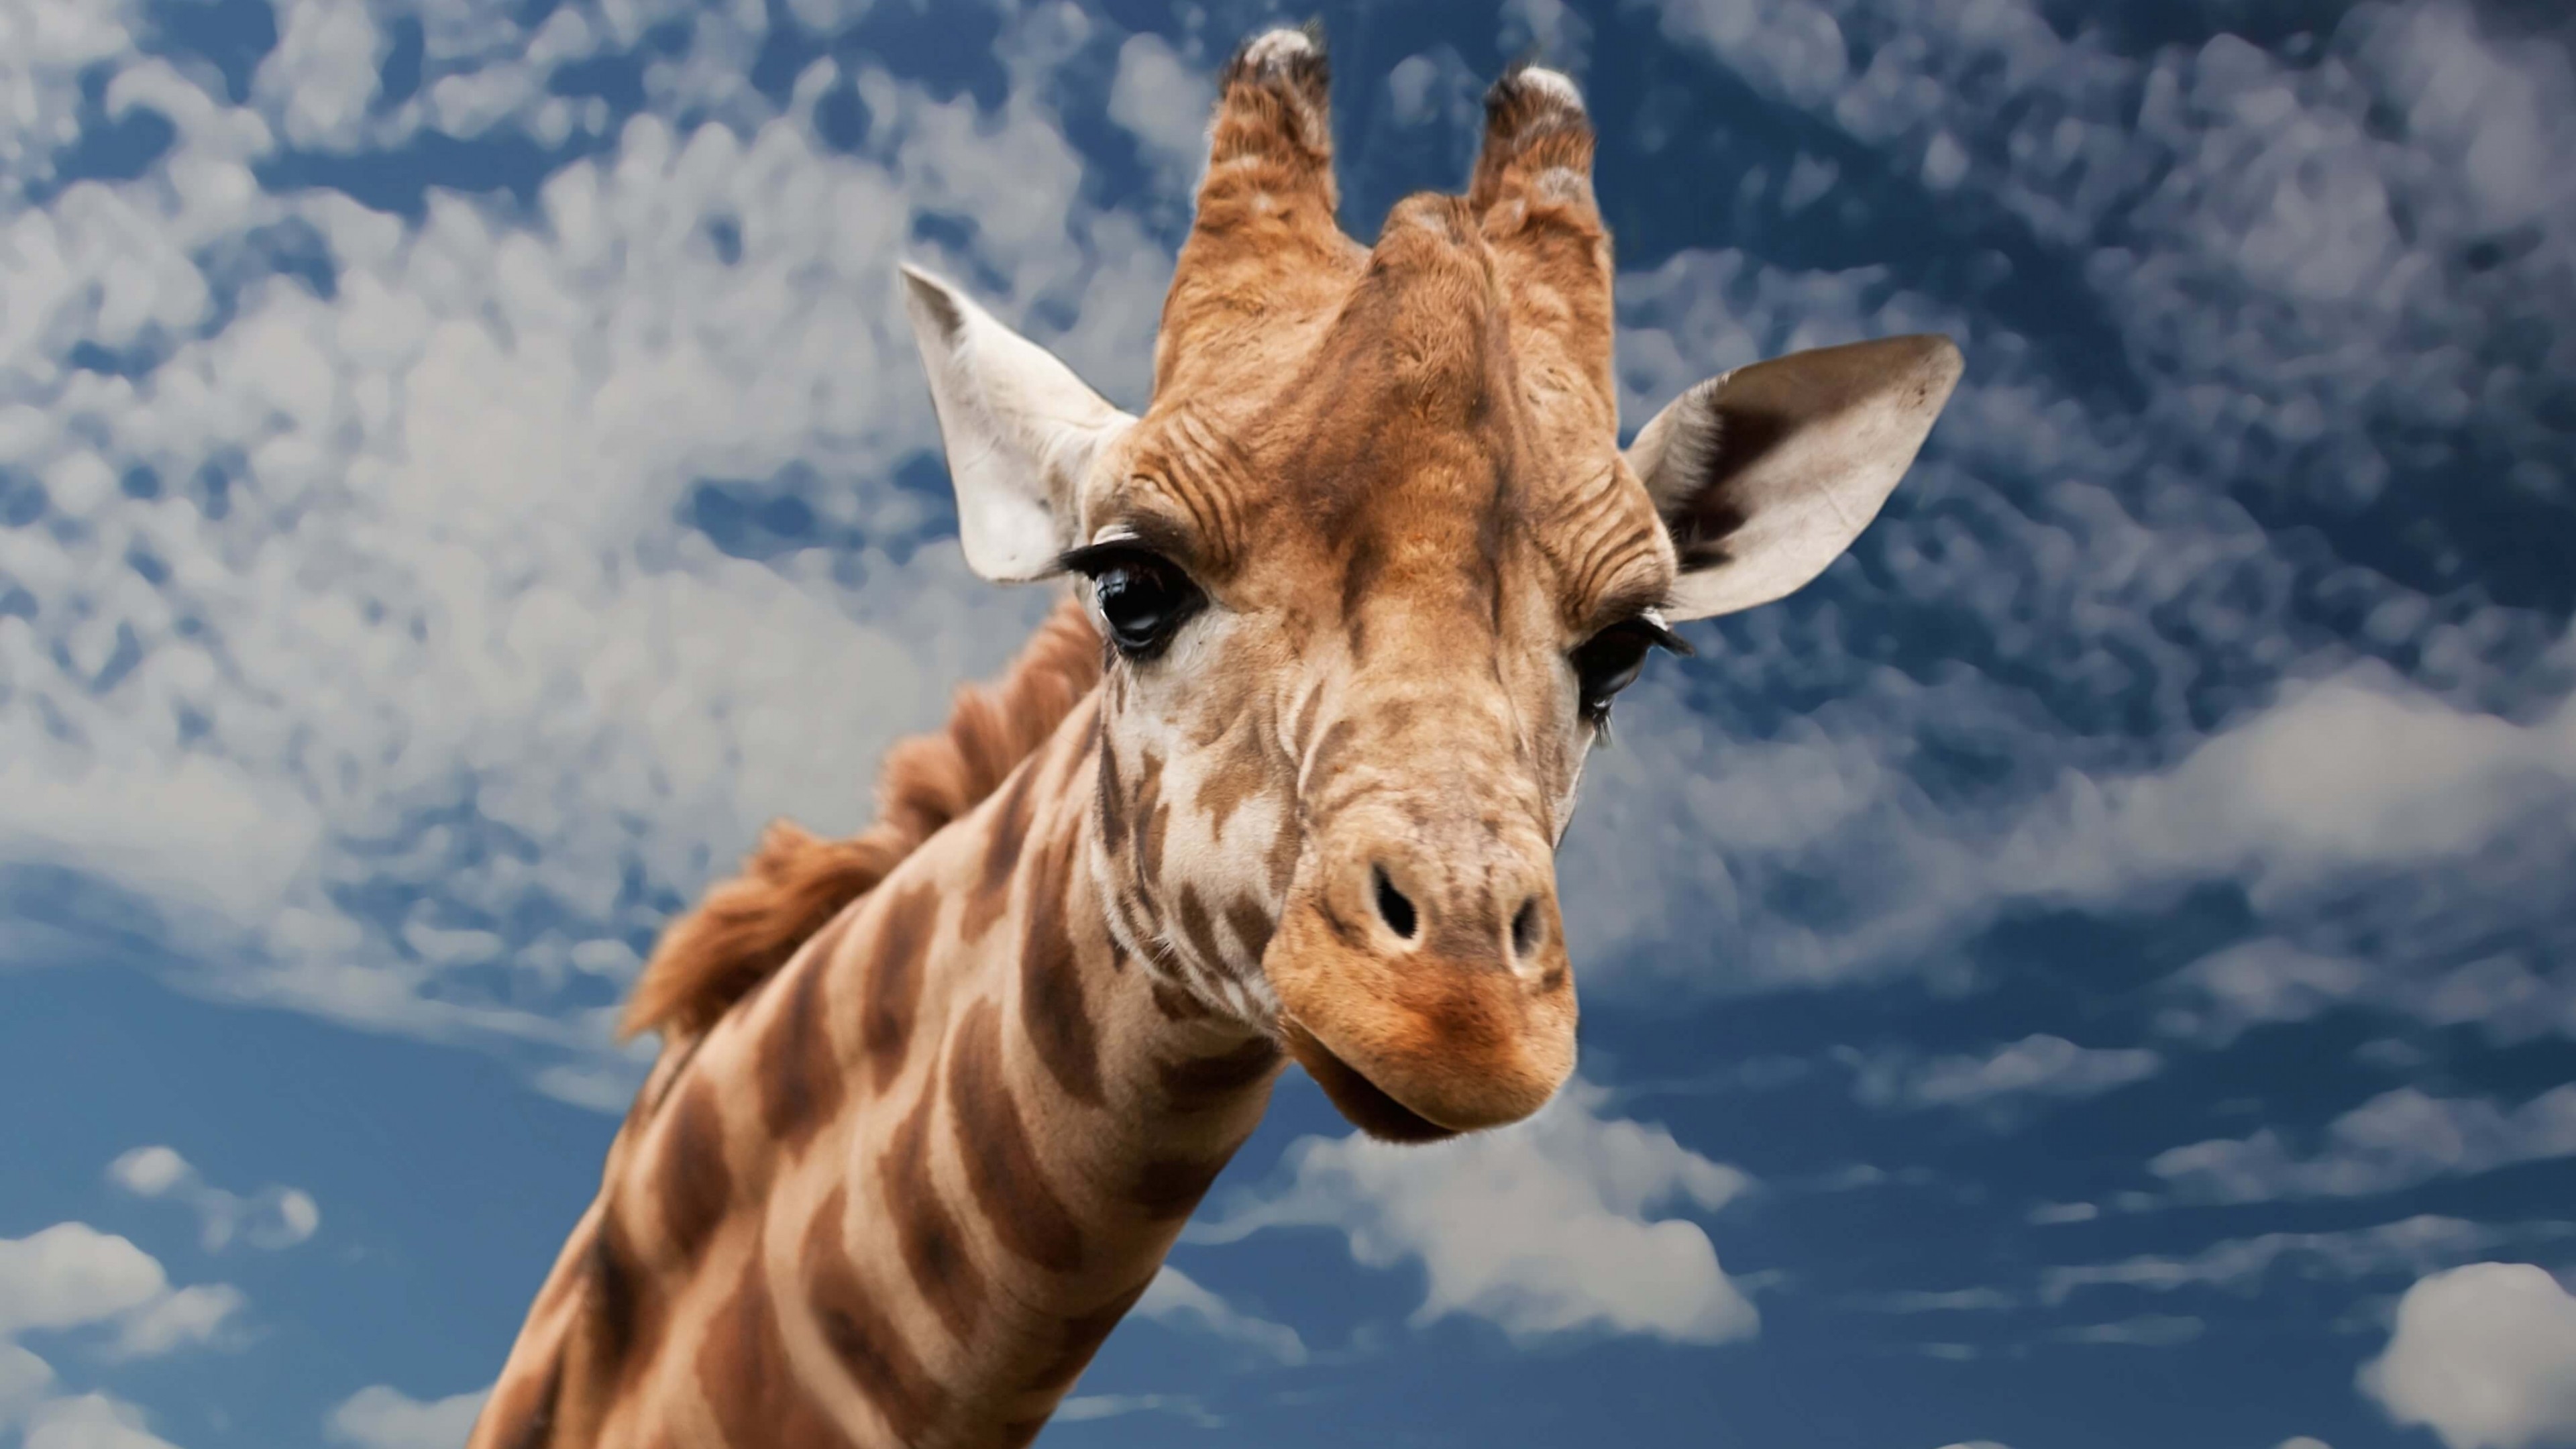 长颈鹿 免费图片 - Public Domain Pictures